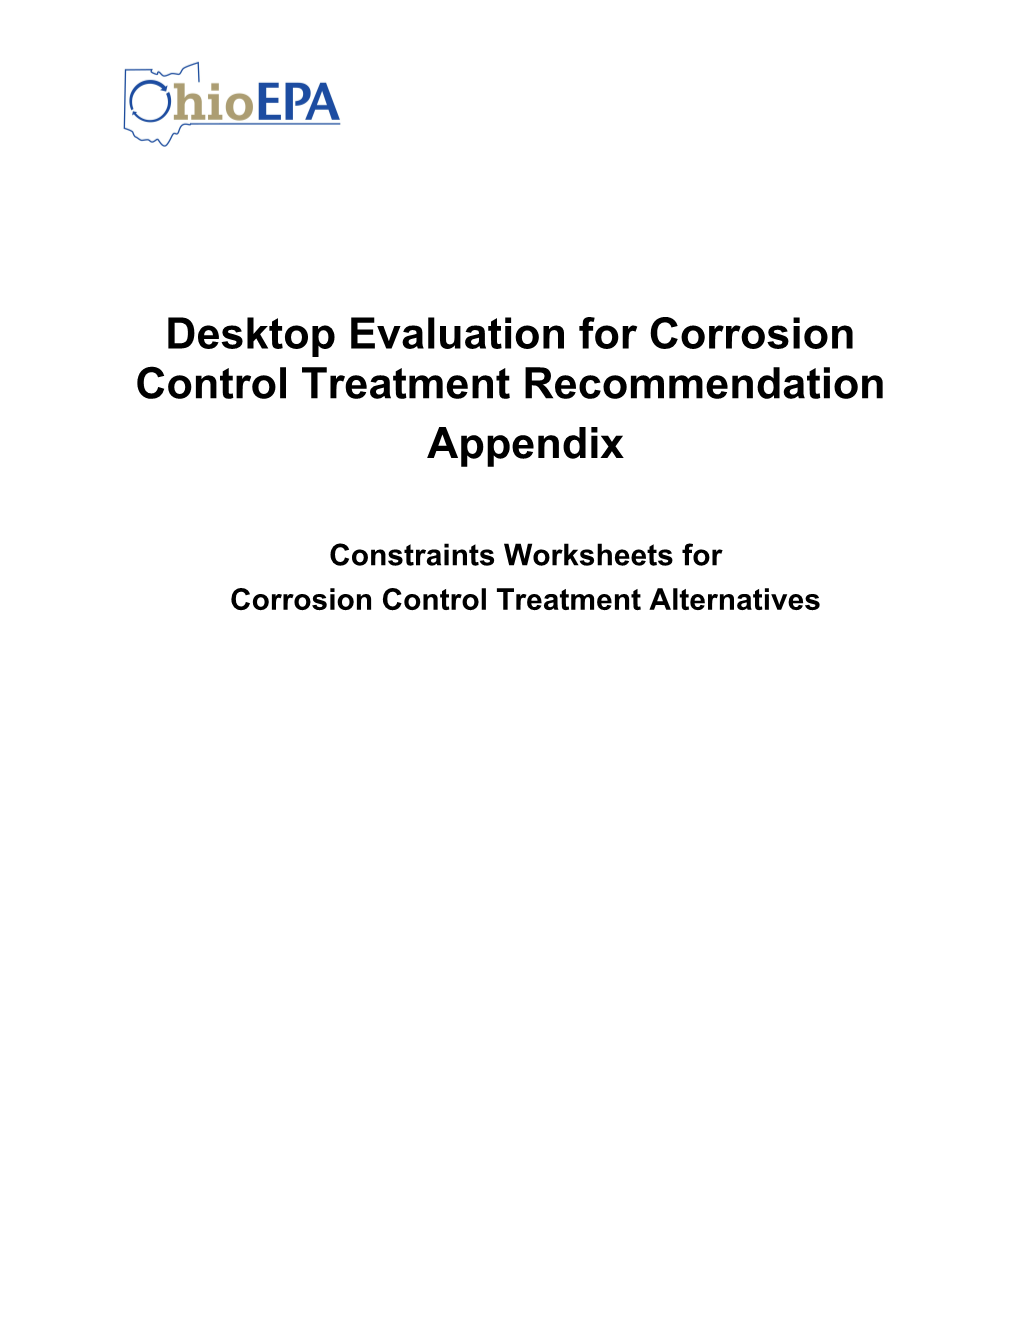 Desktop Evaluation for Corrosion Control Treatment Recommendation